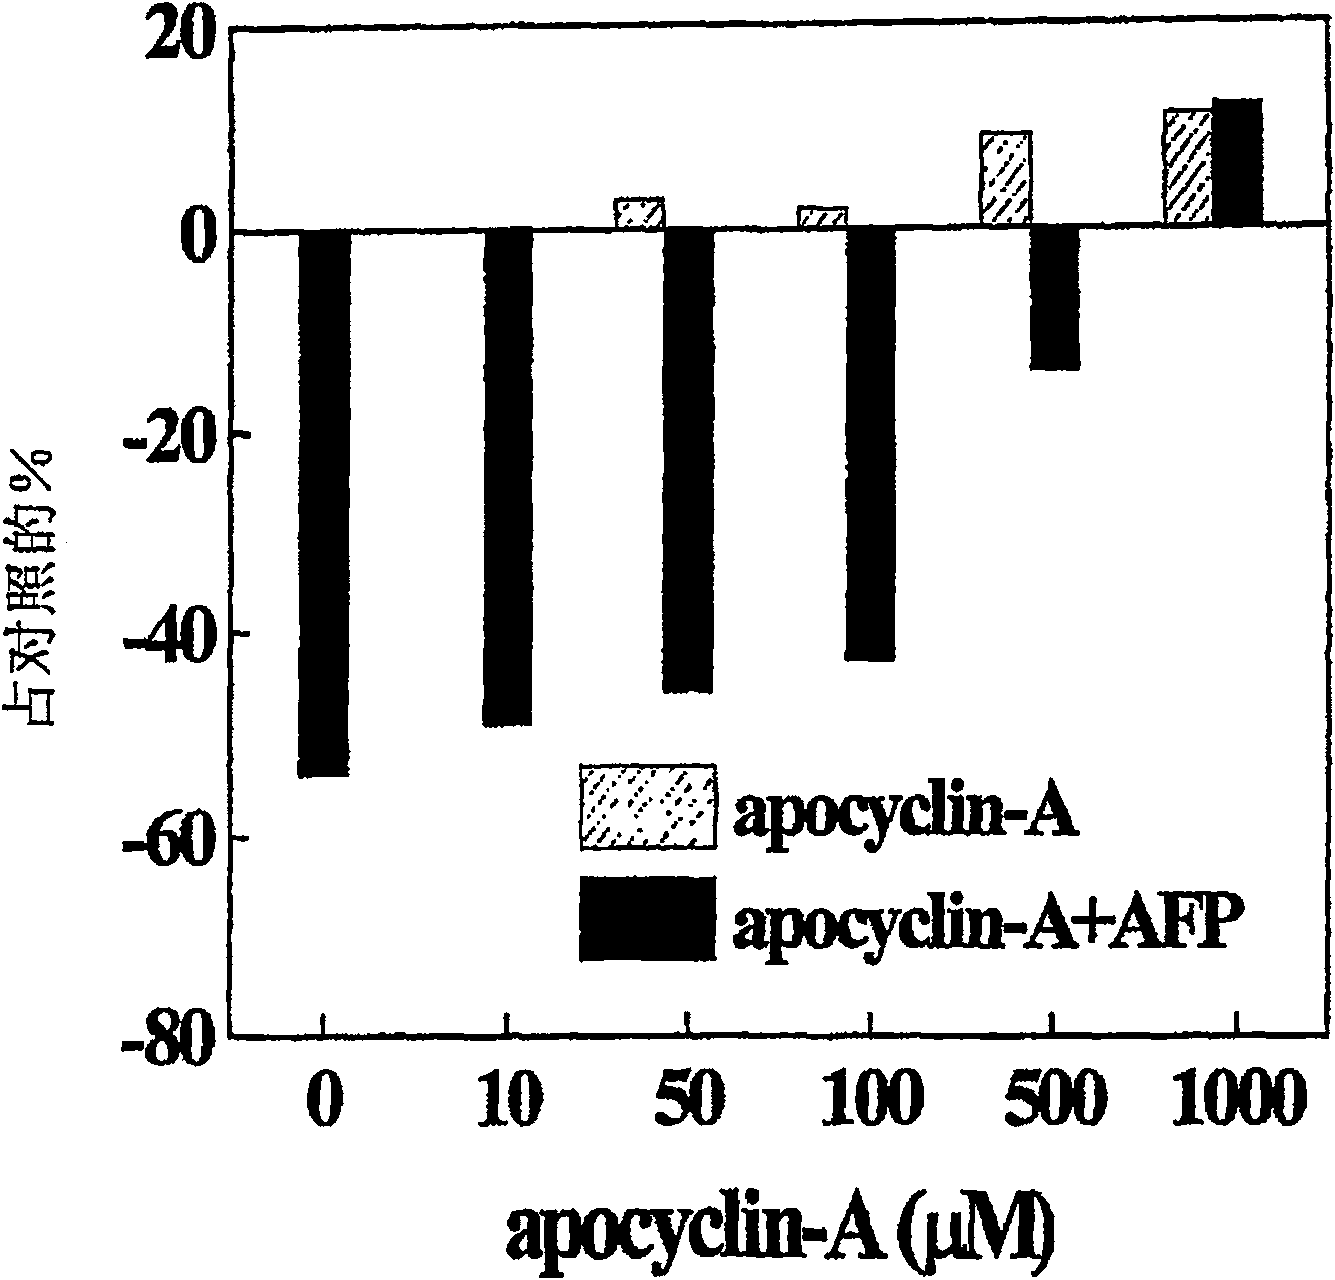 Peptides modulating caspase activation